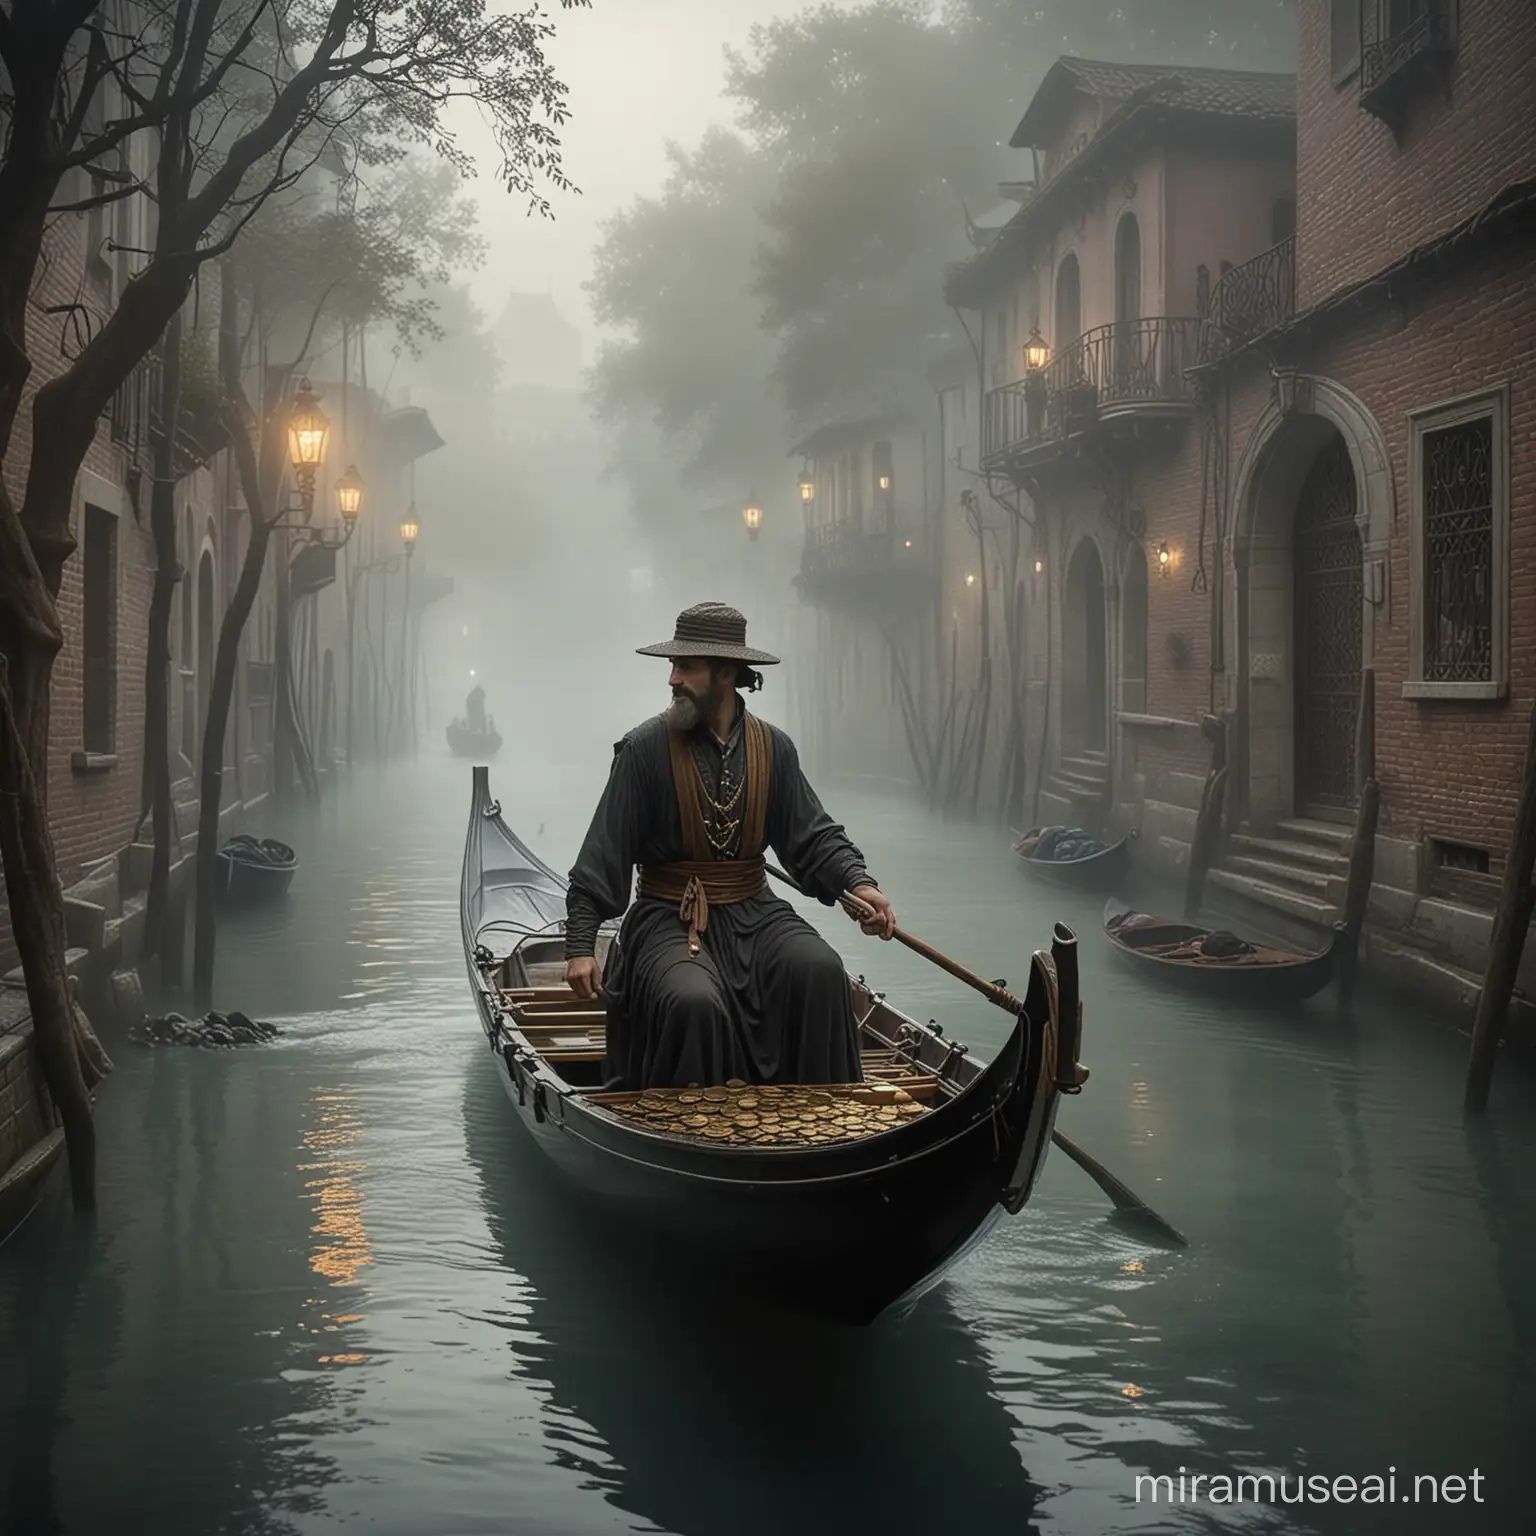 art nouveau style, a hidden gondolier ferrying gondola, river through dark foggy realm, coins lining the river side, magic